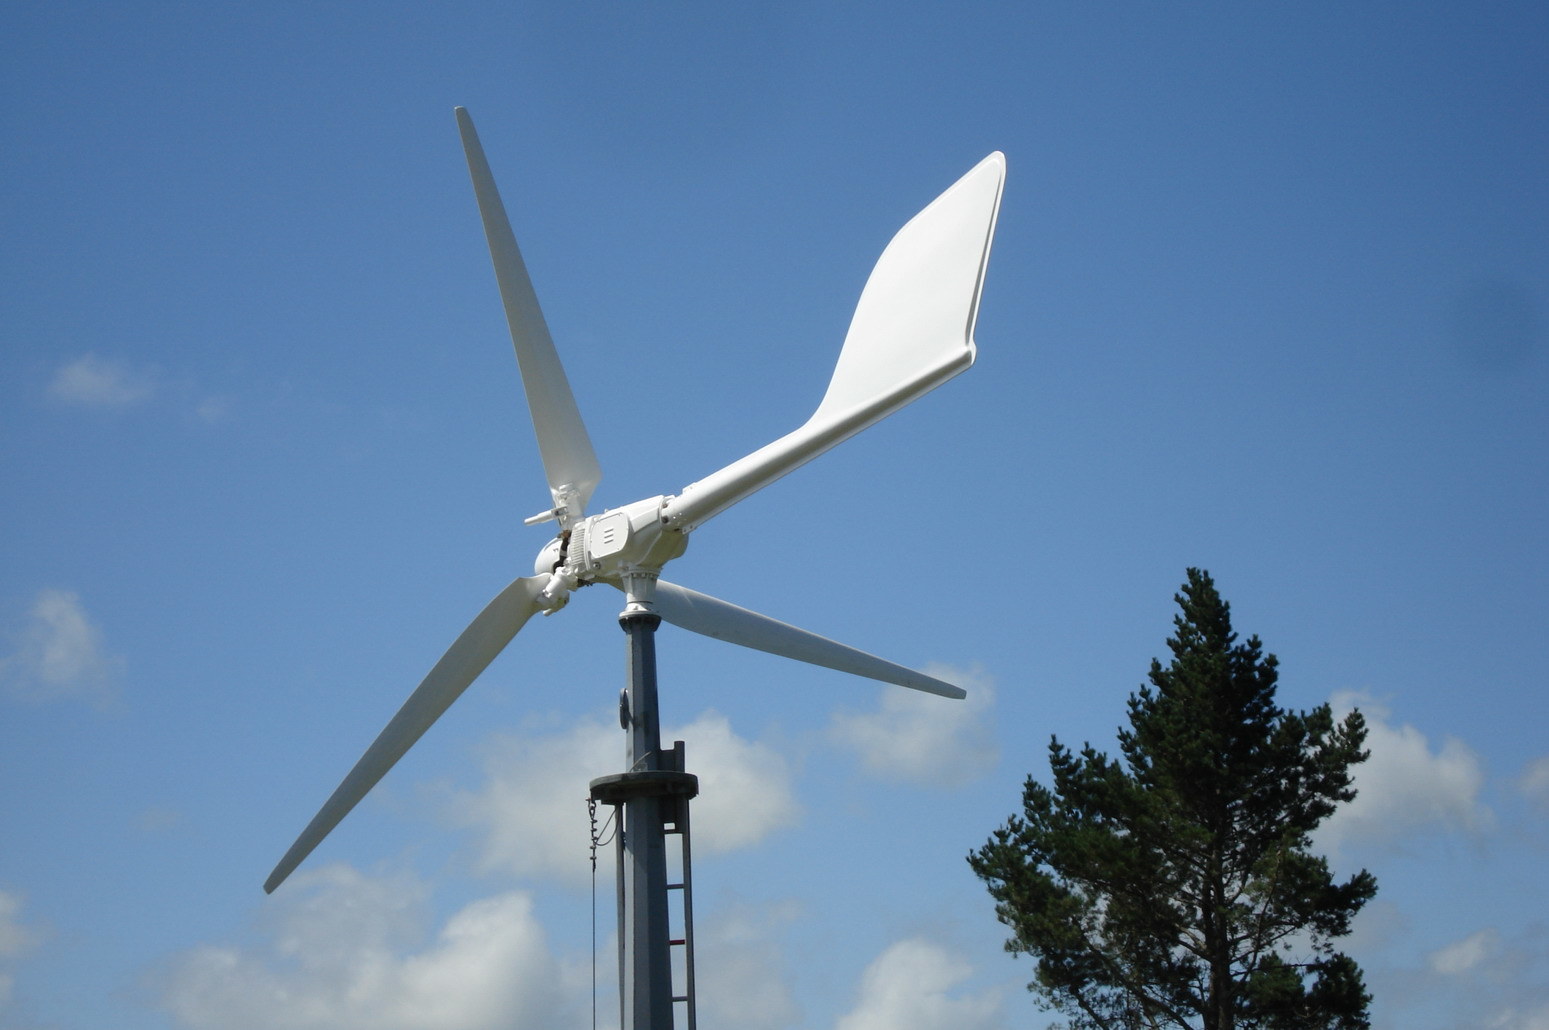 off-Grid Wind Energy Generator